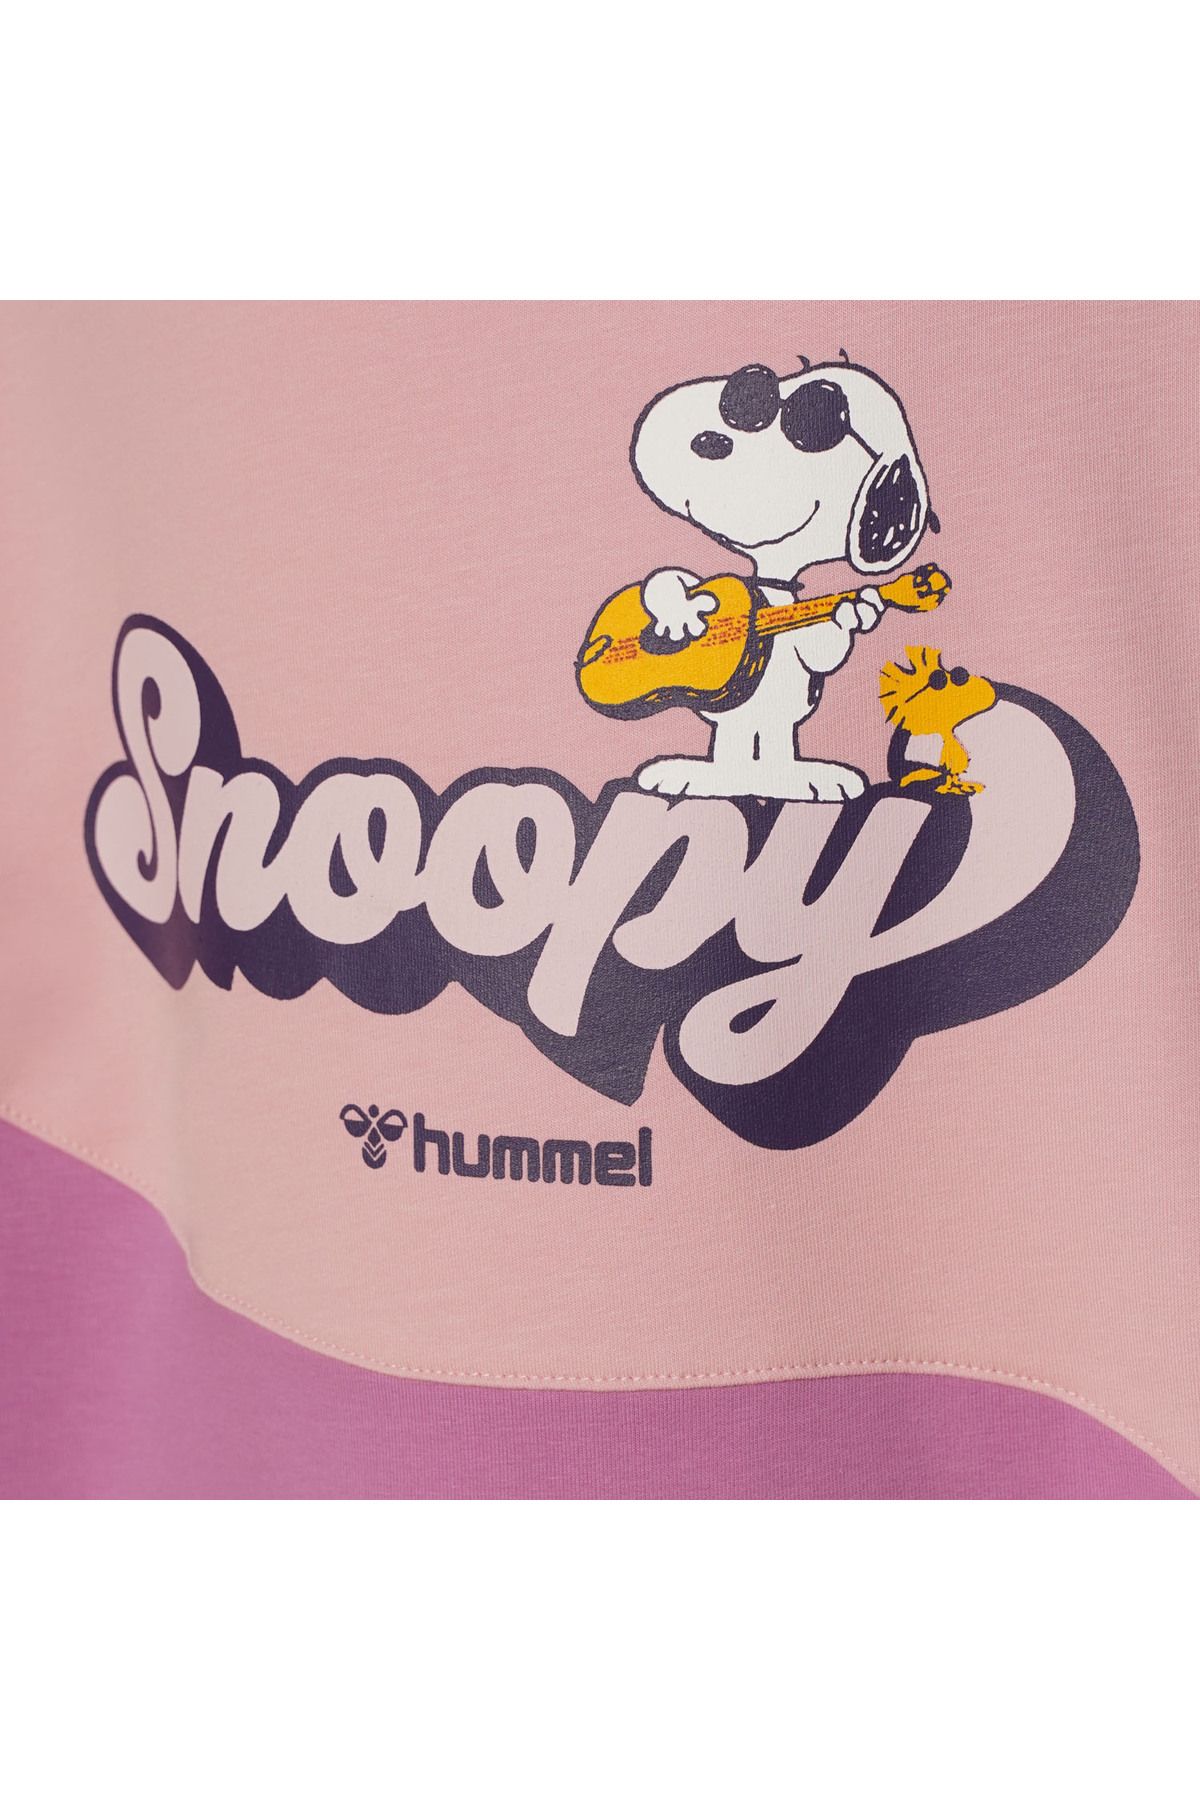 hummel Snoopy Peanuts ™ پیراهن بچه ها